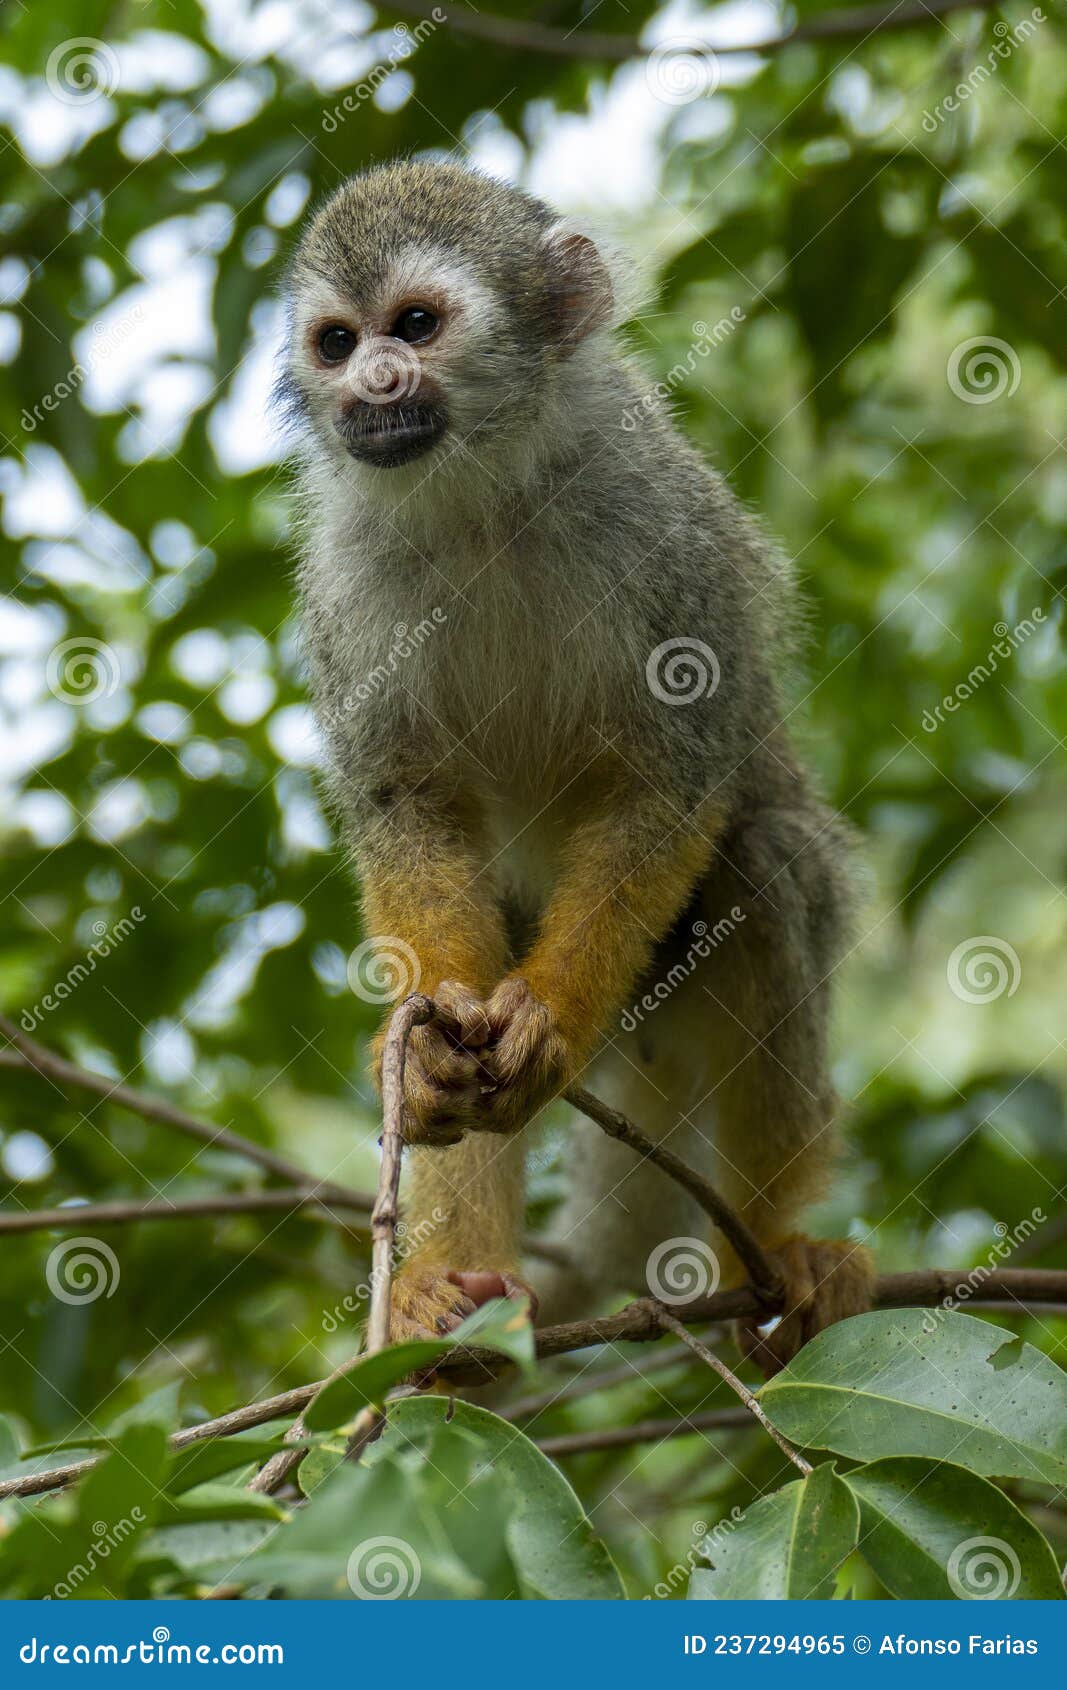 squirrel monkey saimiri sciureus in the tapajos river, amazon rainforest